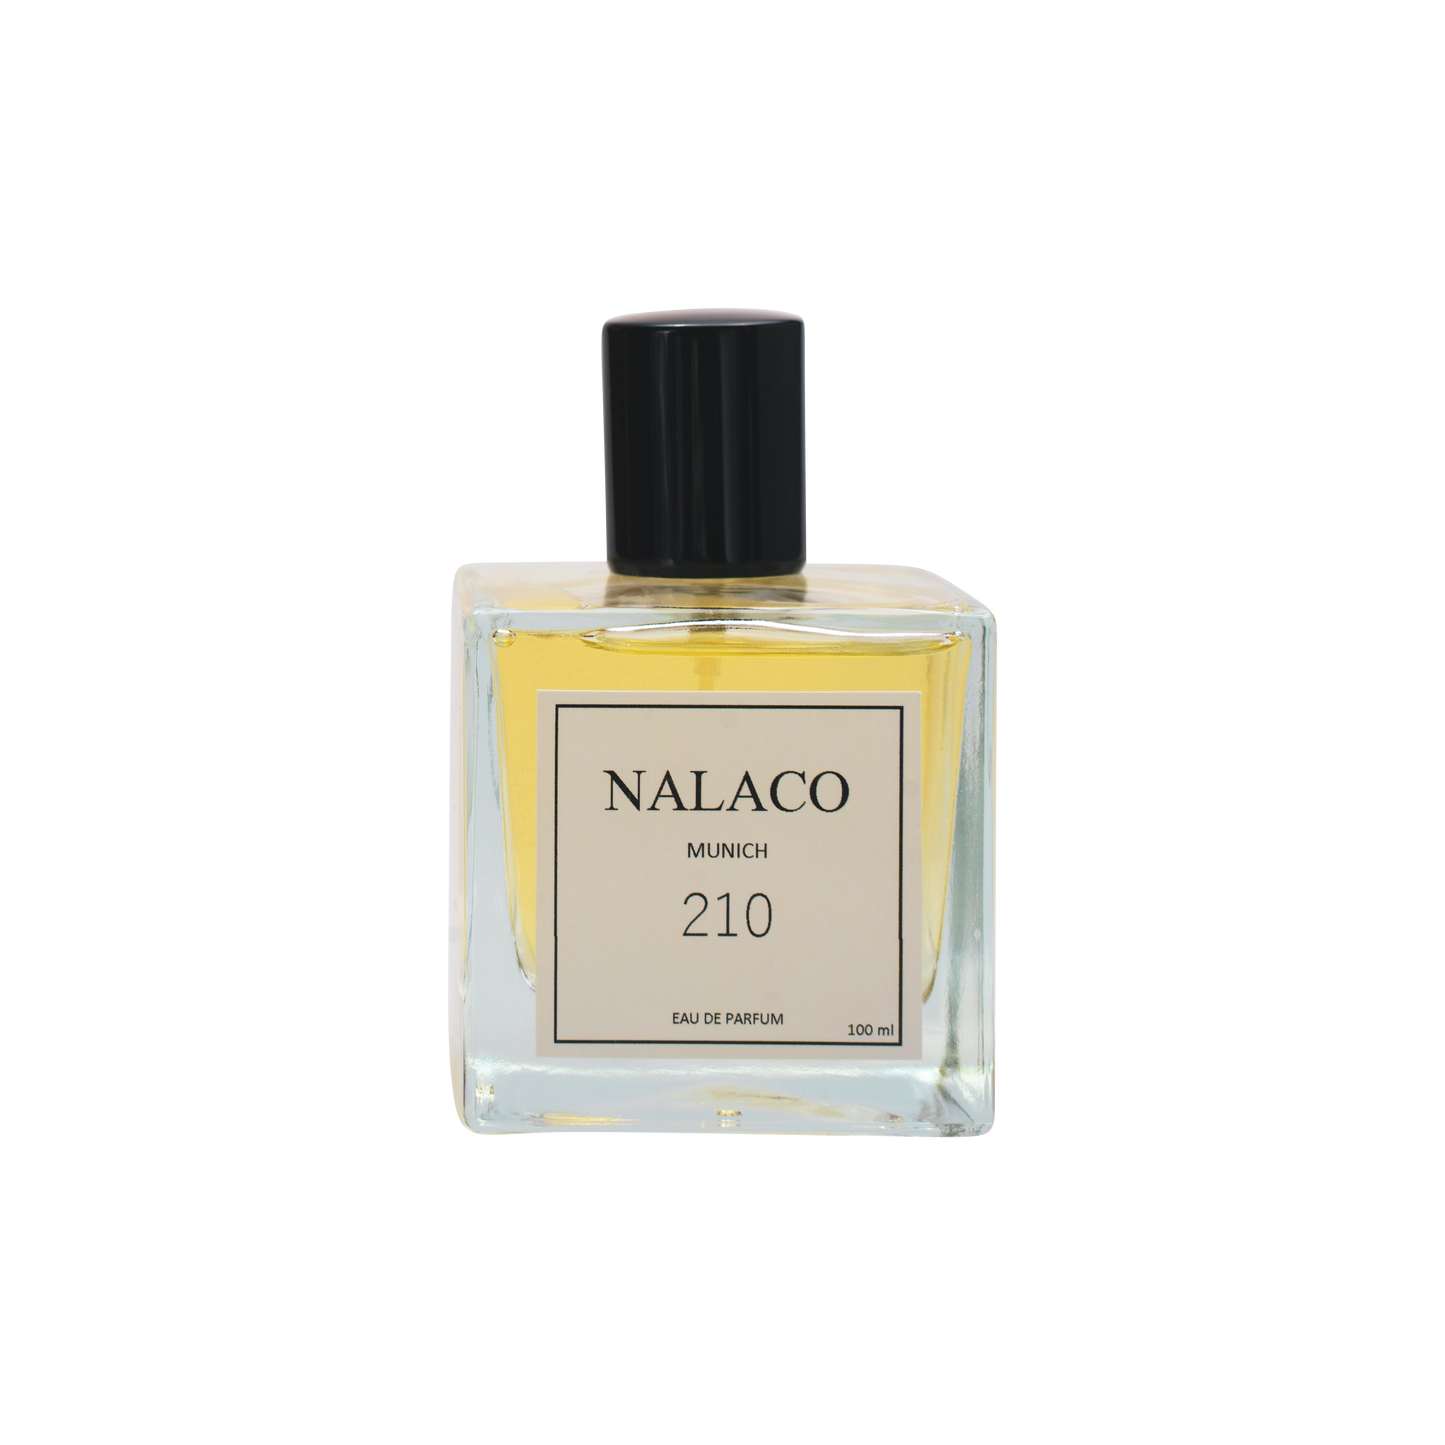 Nalaco No. 210 inspired by Jean Paul Gaultier Ultra Male Intense